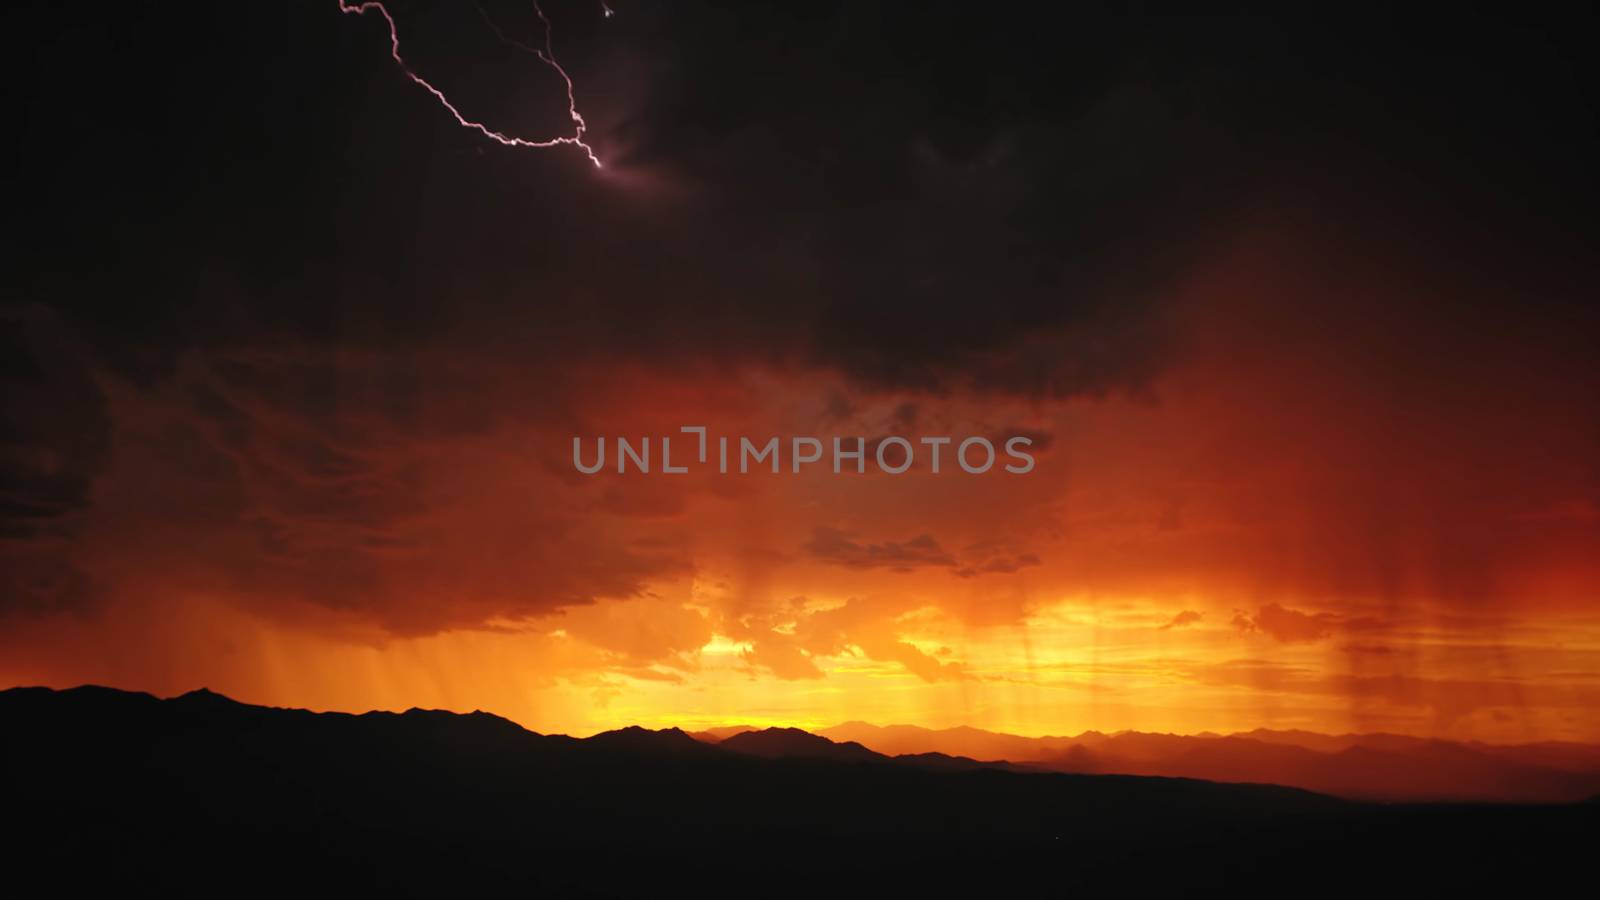 big storm lighting sky background by DonMatadoR